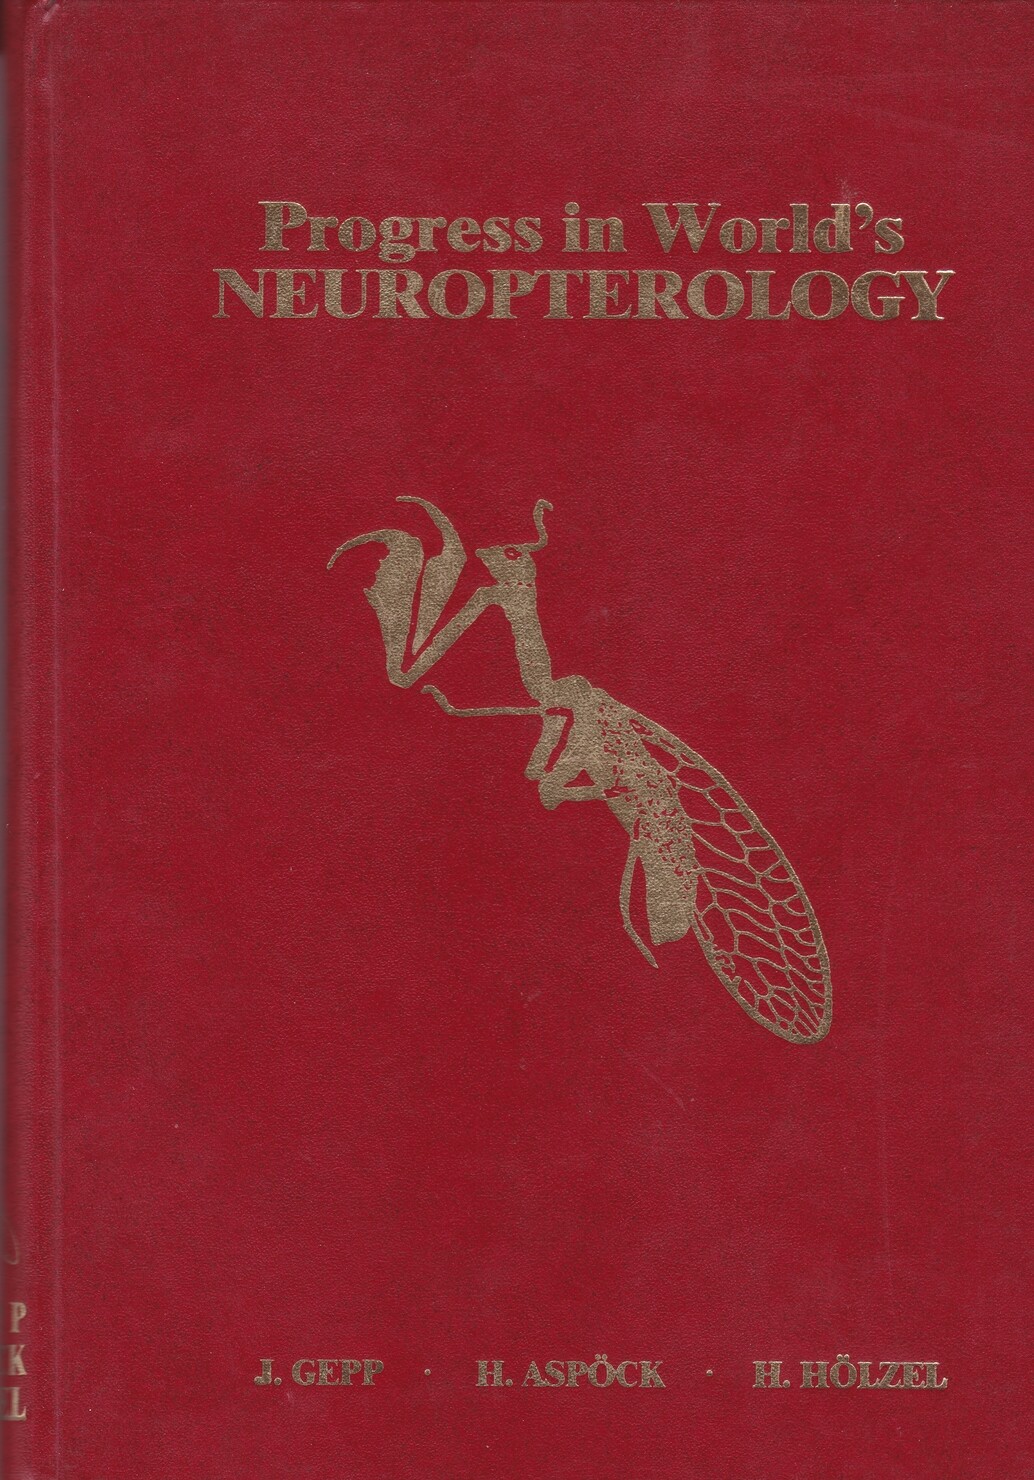 Progress in World's Neuropterology (Rippl-Rónai Múzeum CC BY-NC-ND)